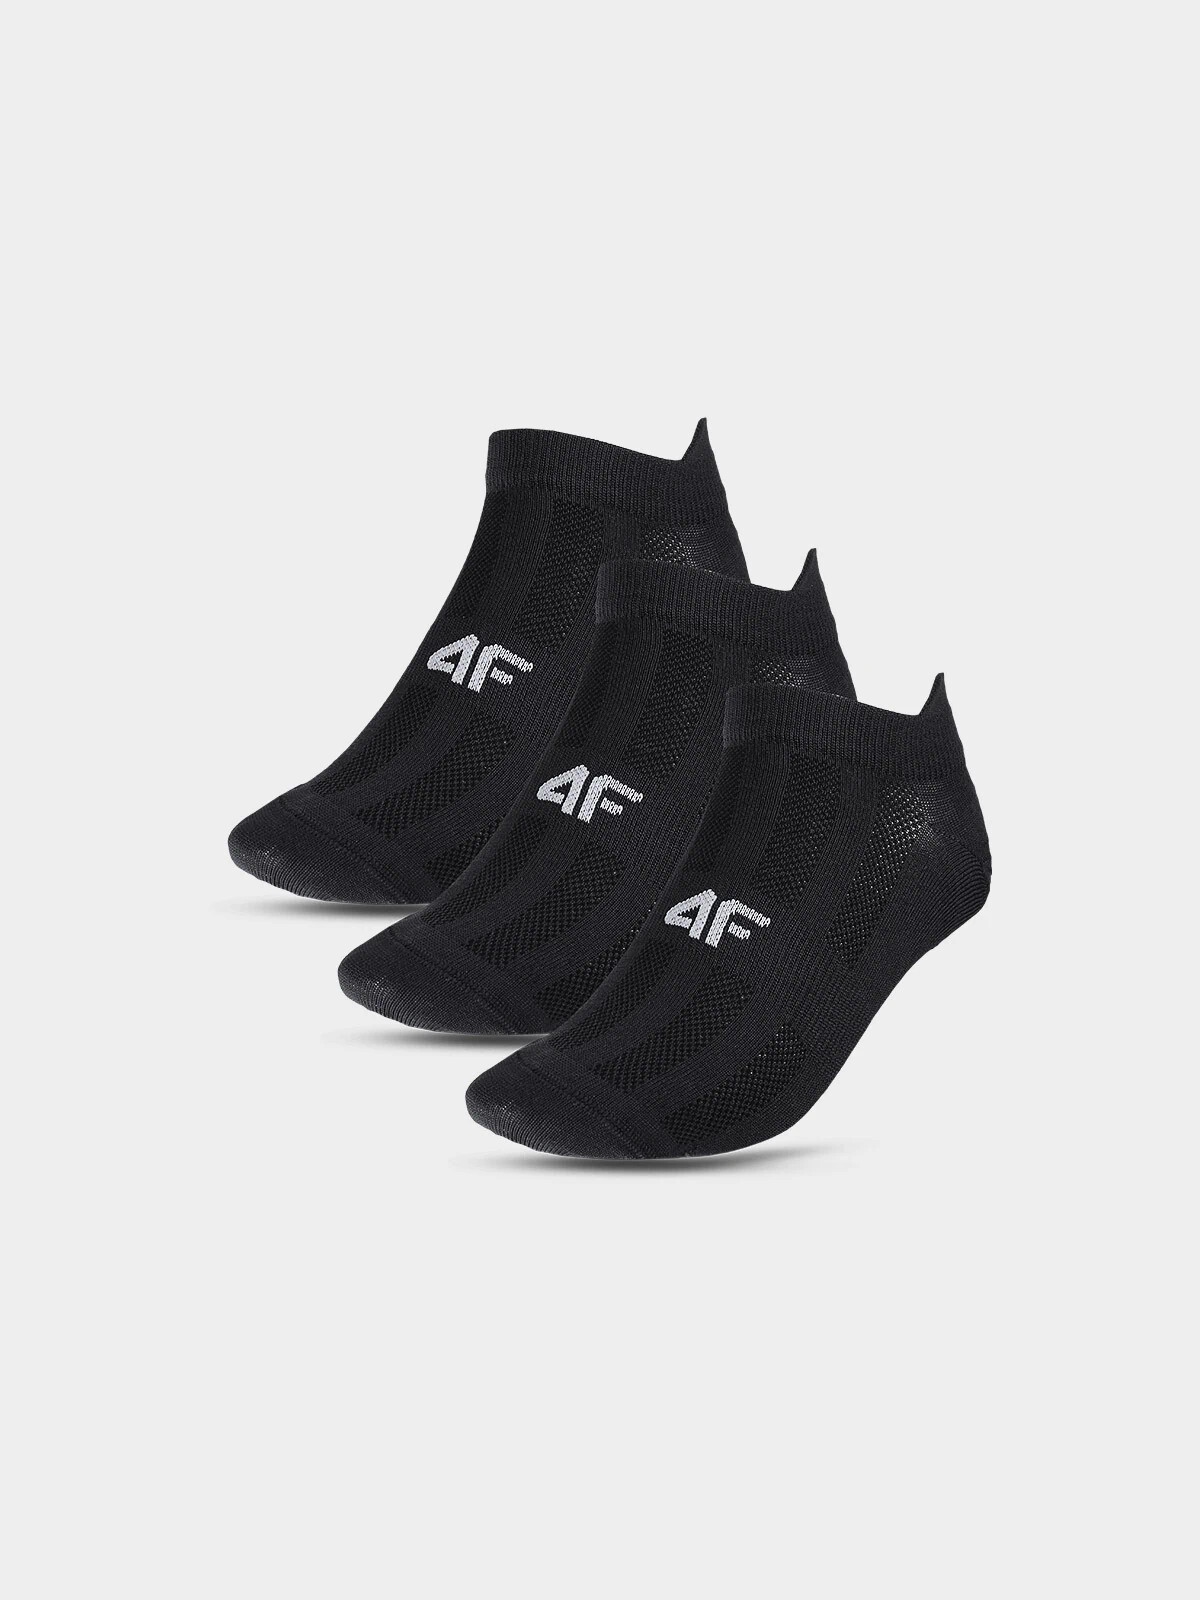 Men's Sports Socks Under the Ankle (3pack) 4F - Black